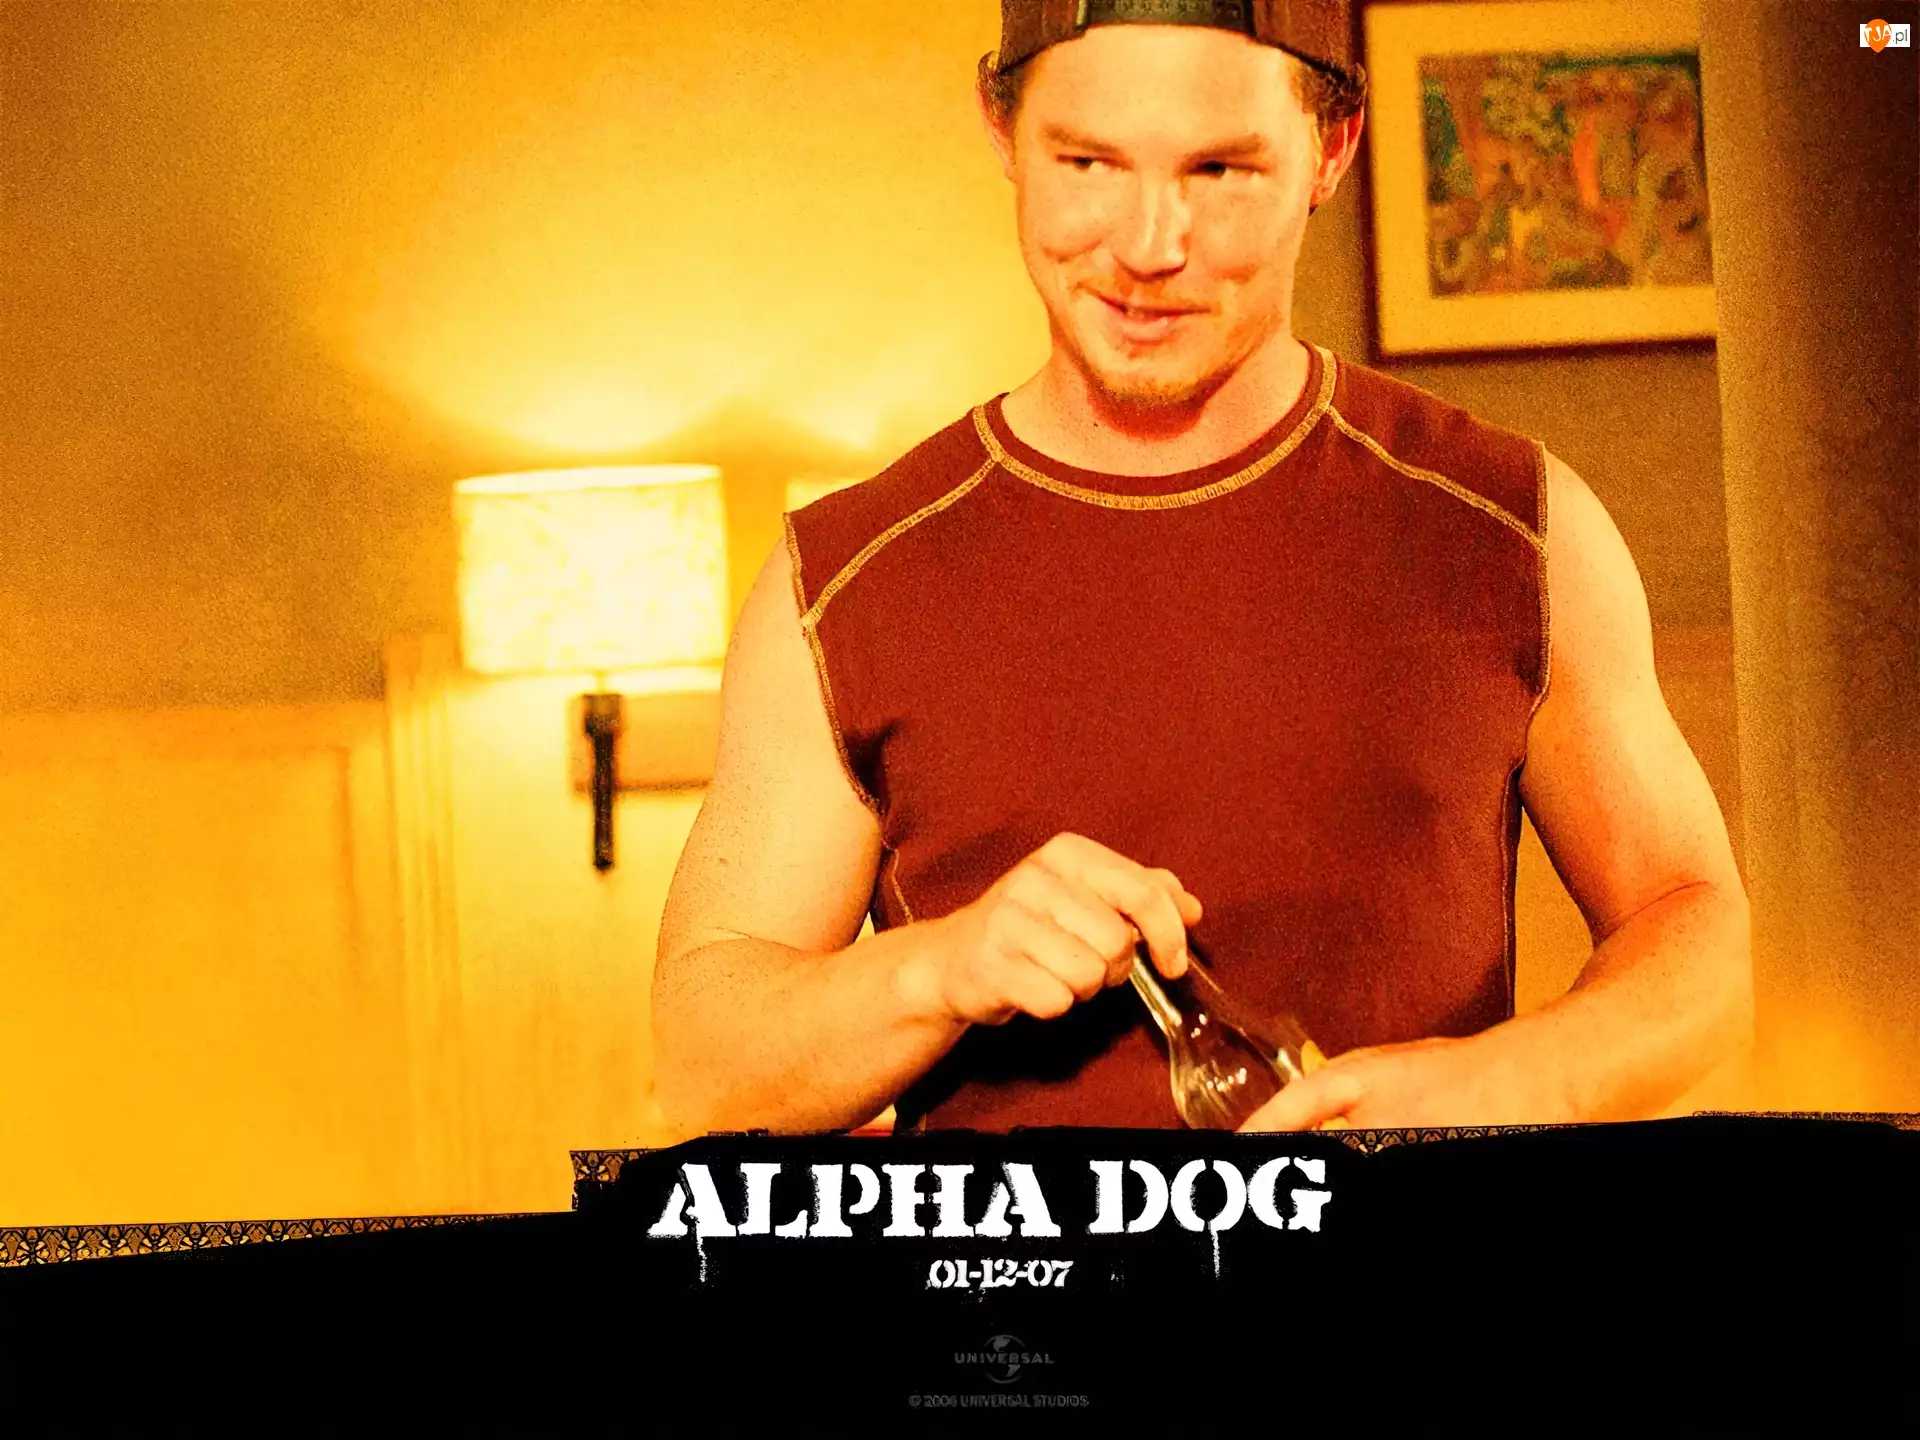 Alpha Dog, Shawn Hatosy